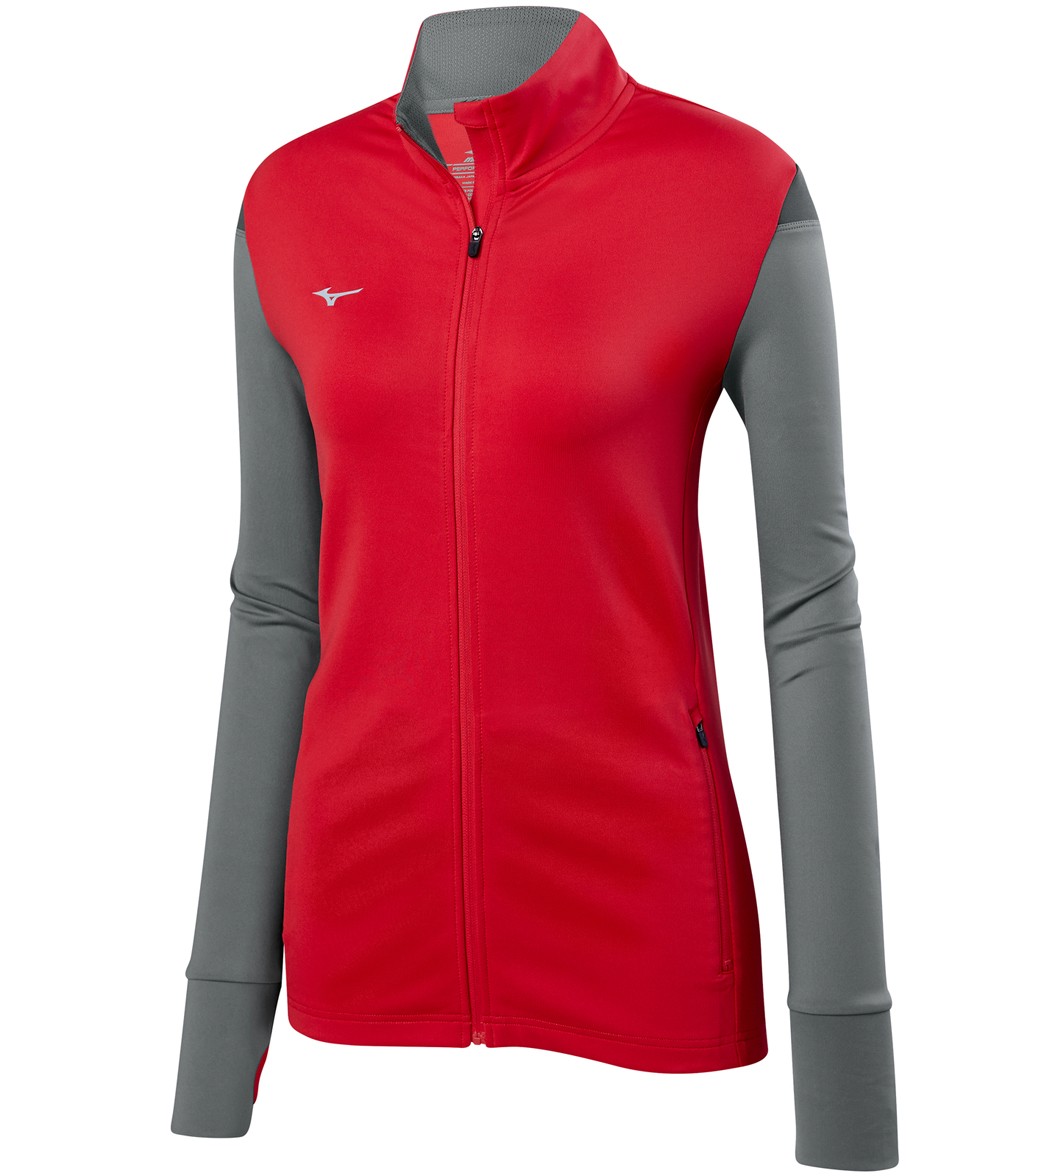 Mizuno Girls' Horizon Full Zip Volleyball Jacket - Red/Silver/Charcoal Medium Cotton/Polyester - Swimoutlet.com